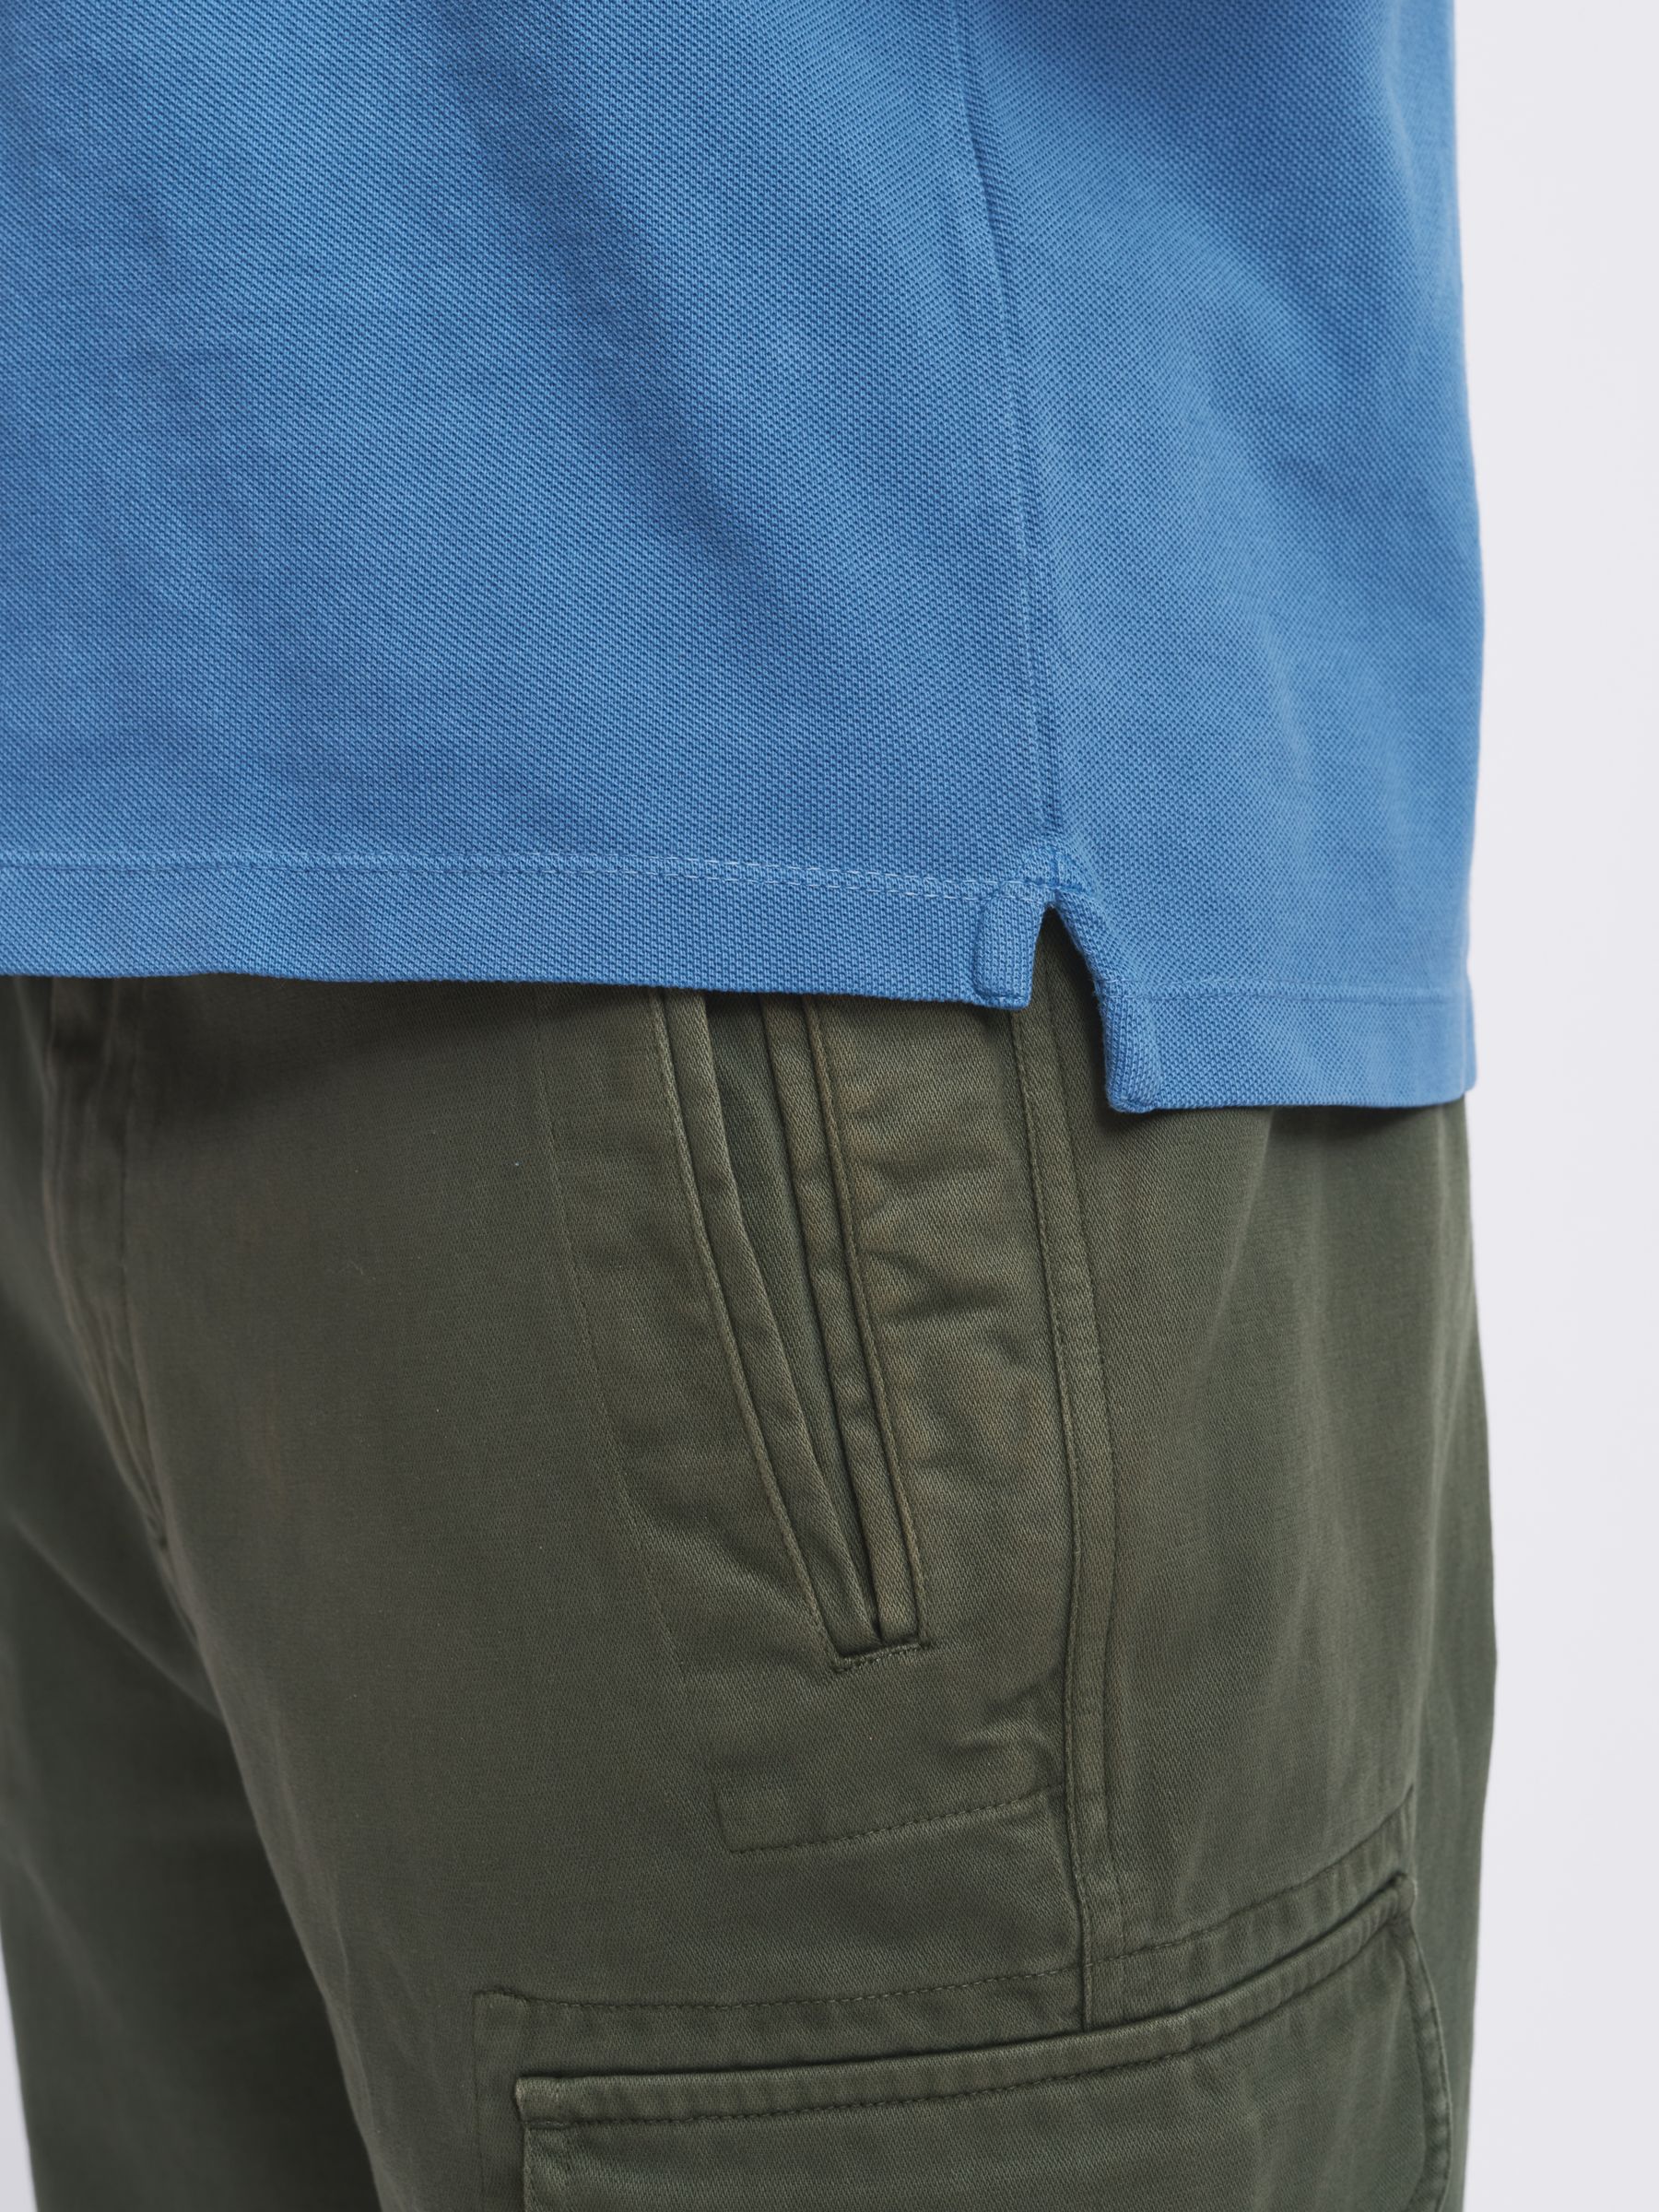 Aubin Hanby Pique Short Sleeve Polo Shirt, Pale Blue, S